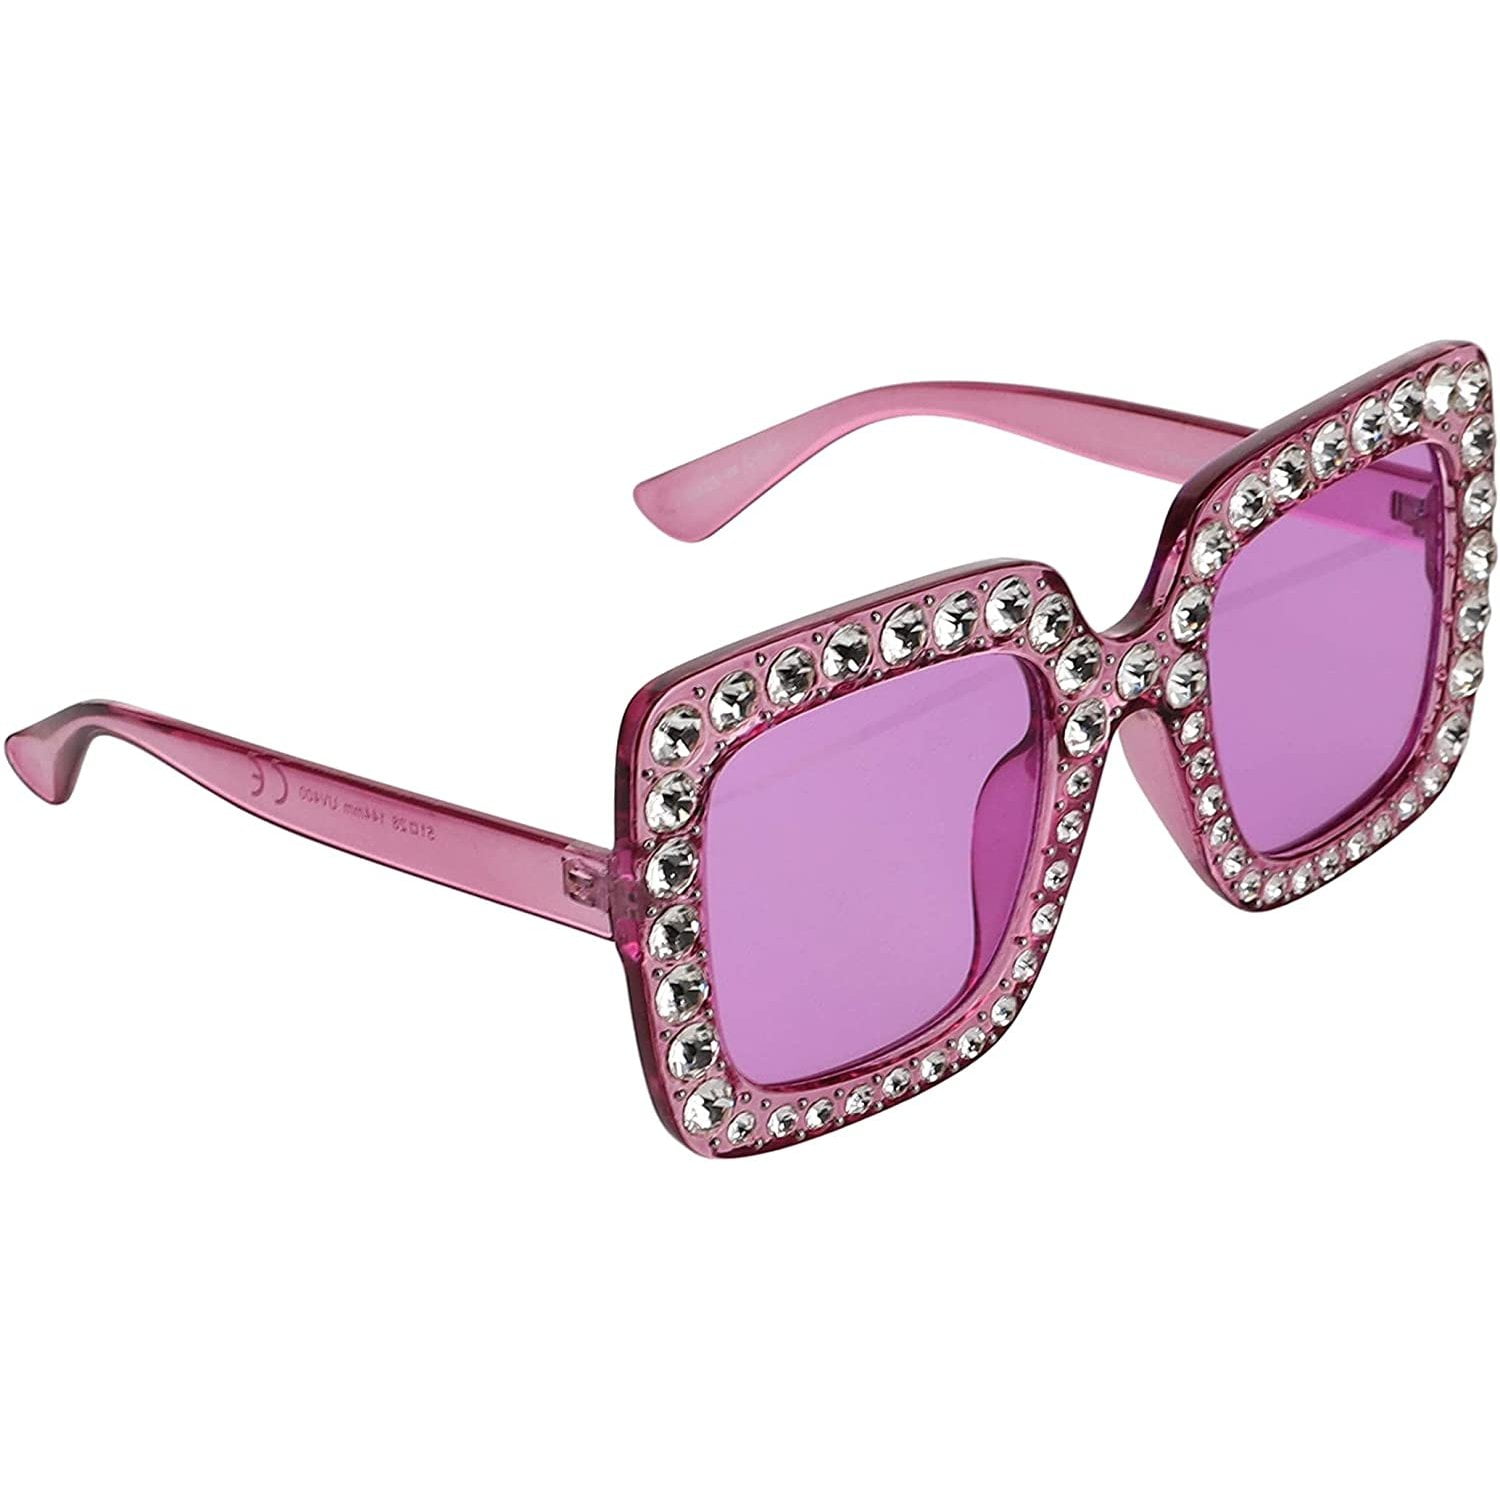 Gucci rhinestone sunglasses – Vivo Vintage